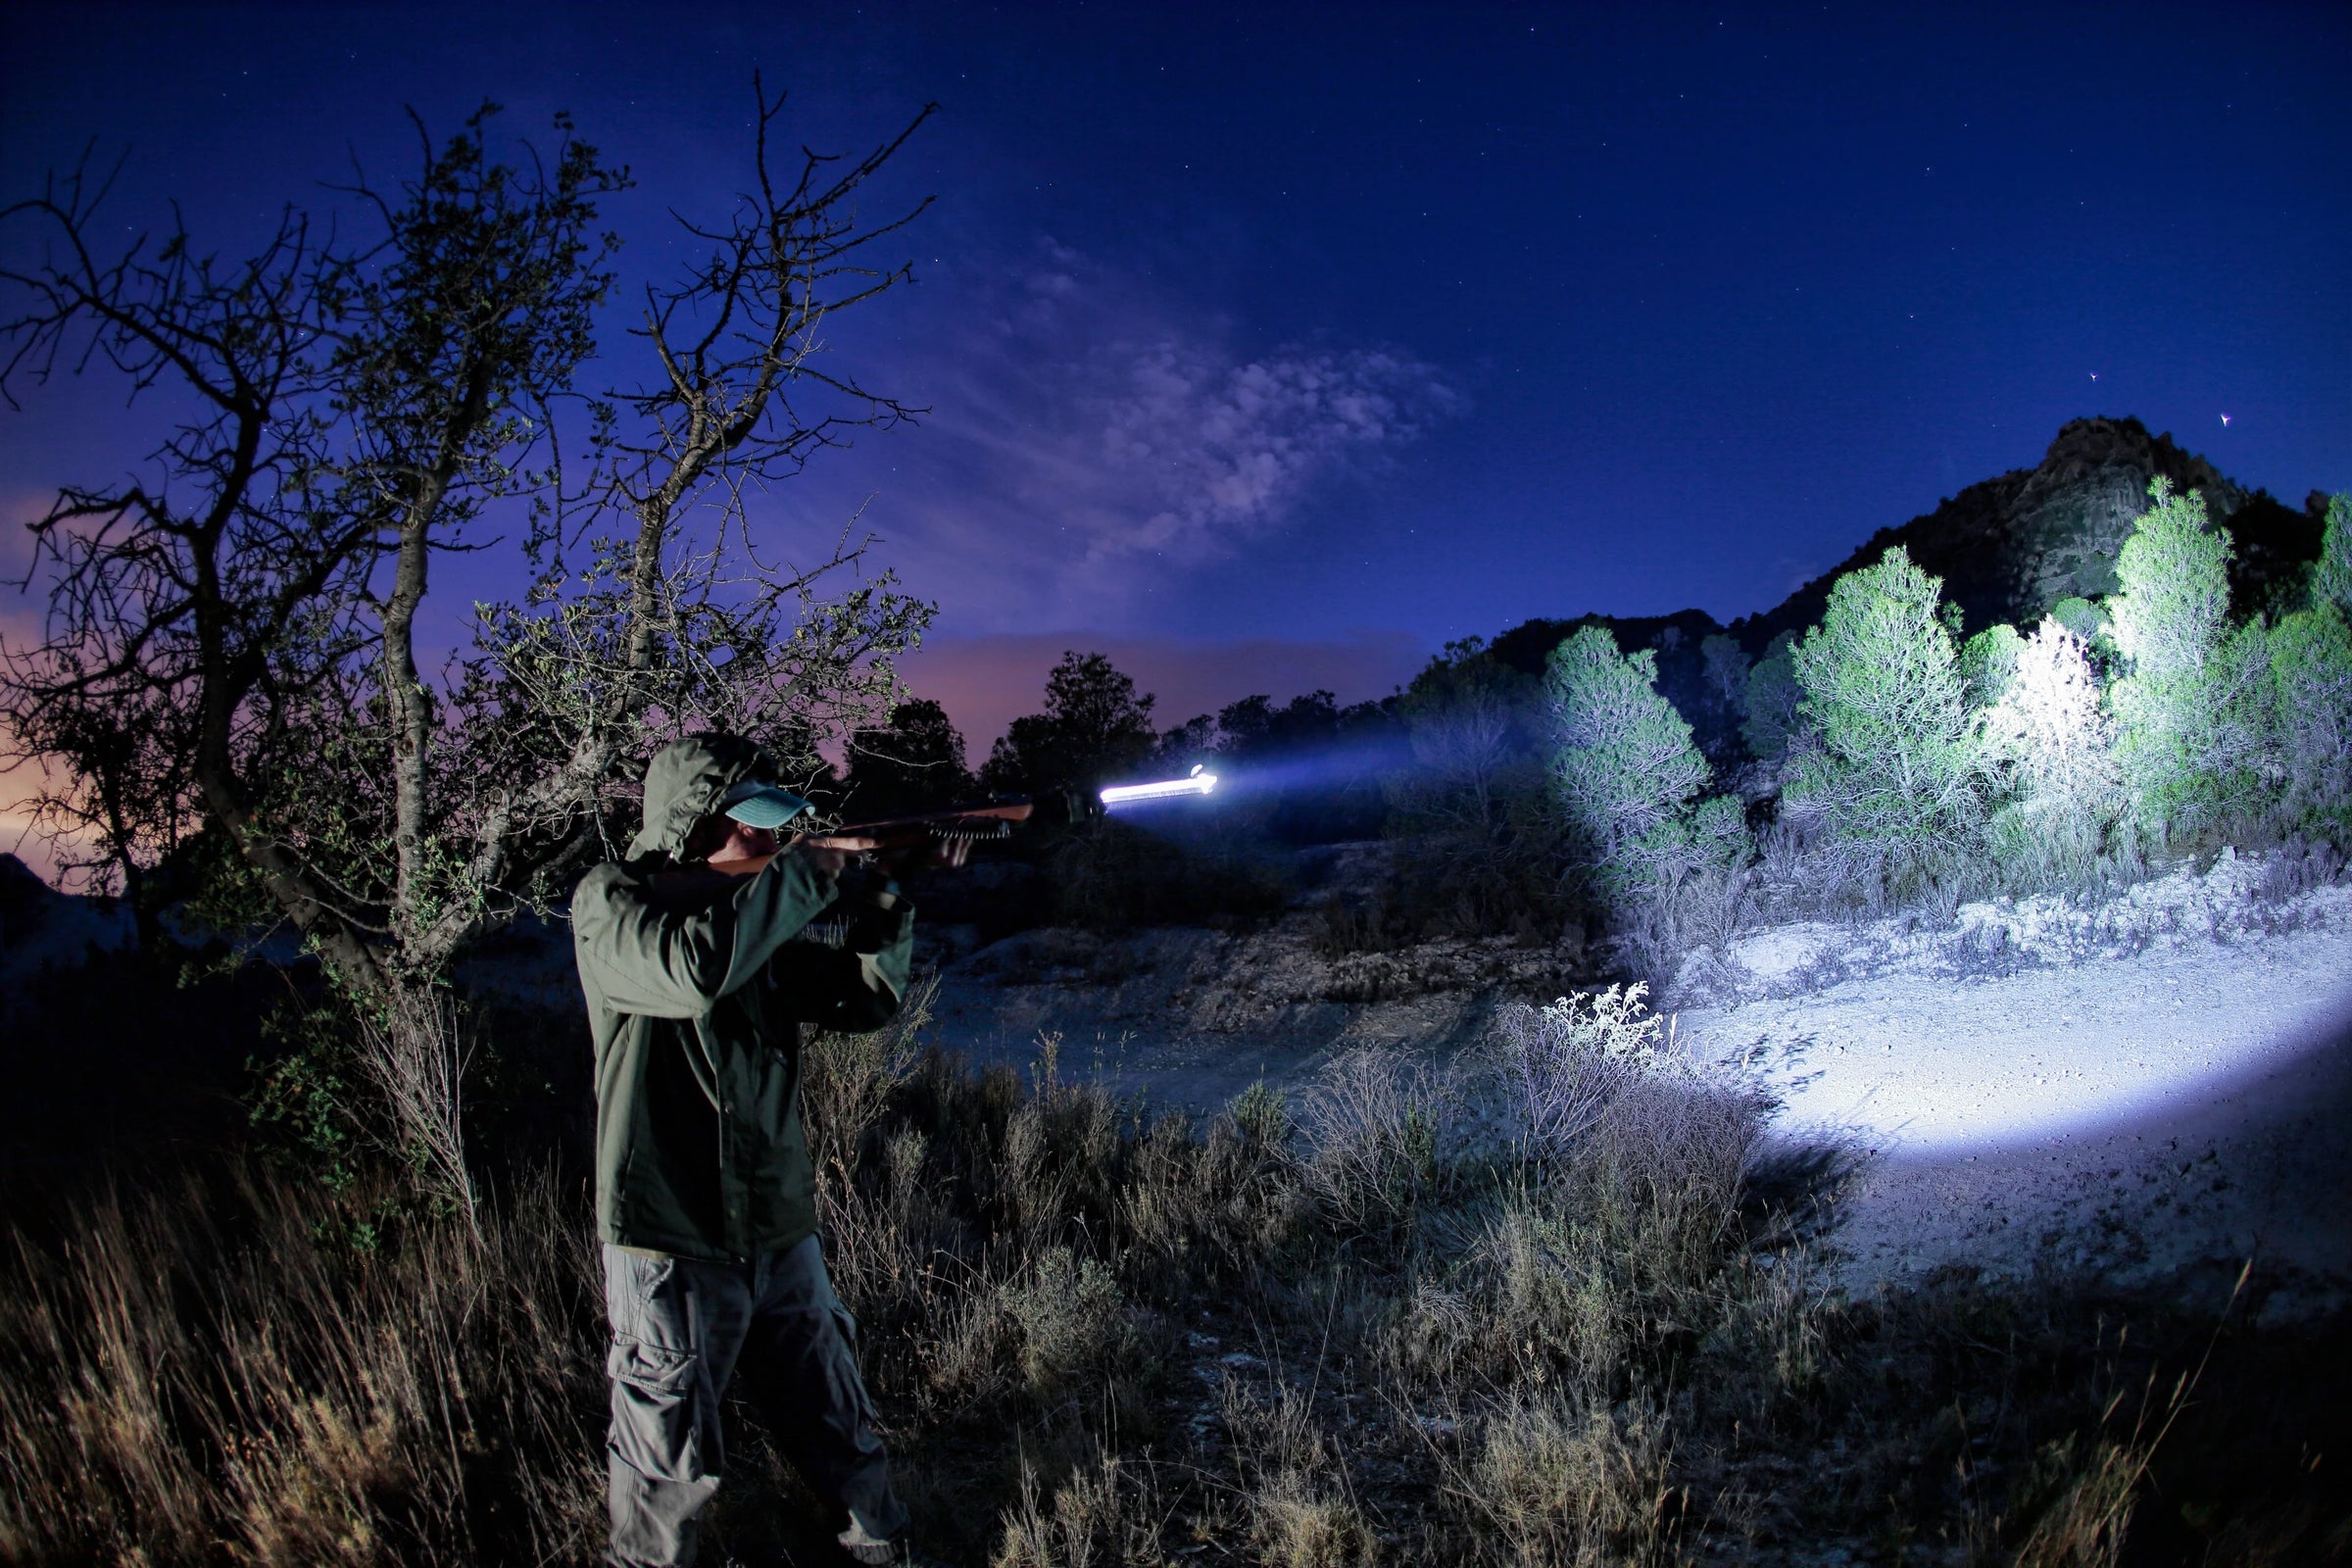 fenix flashlight on a hunting trip